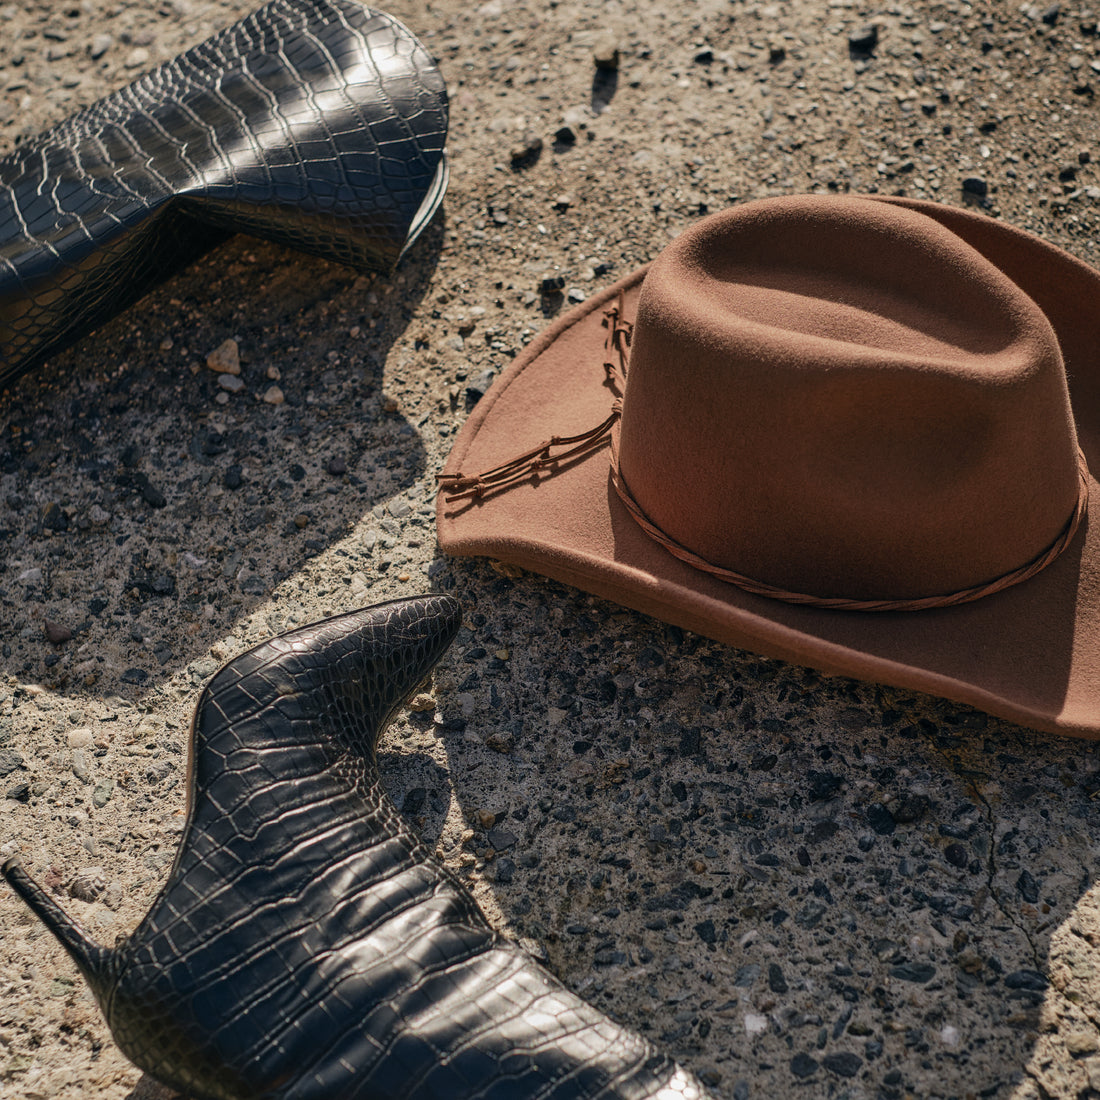 The Texan - Cowboy hat